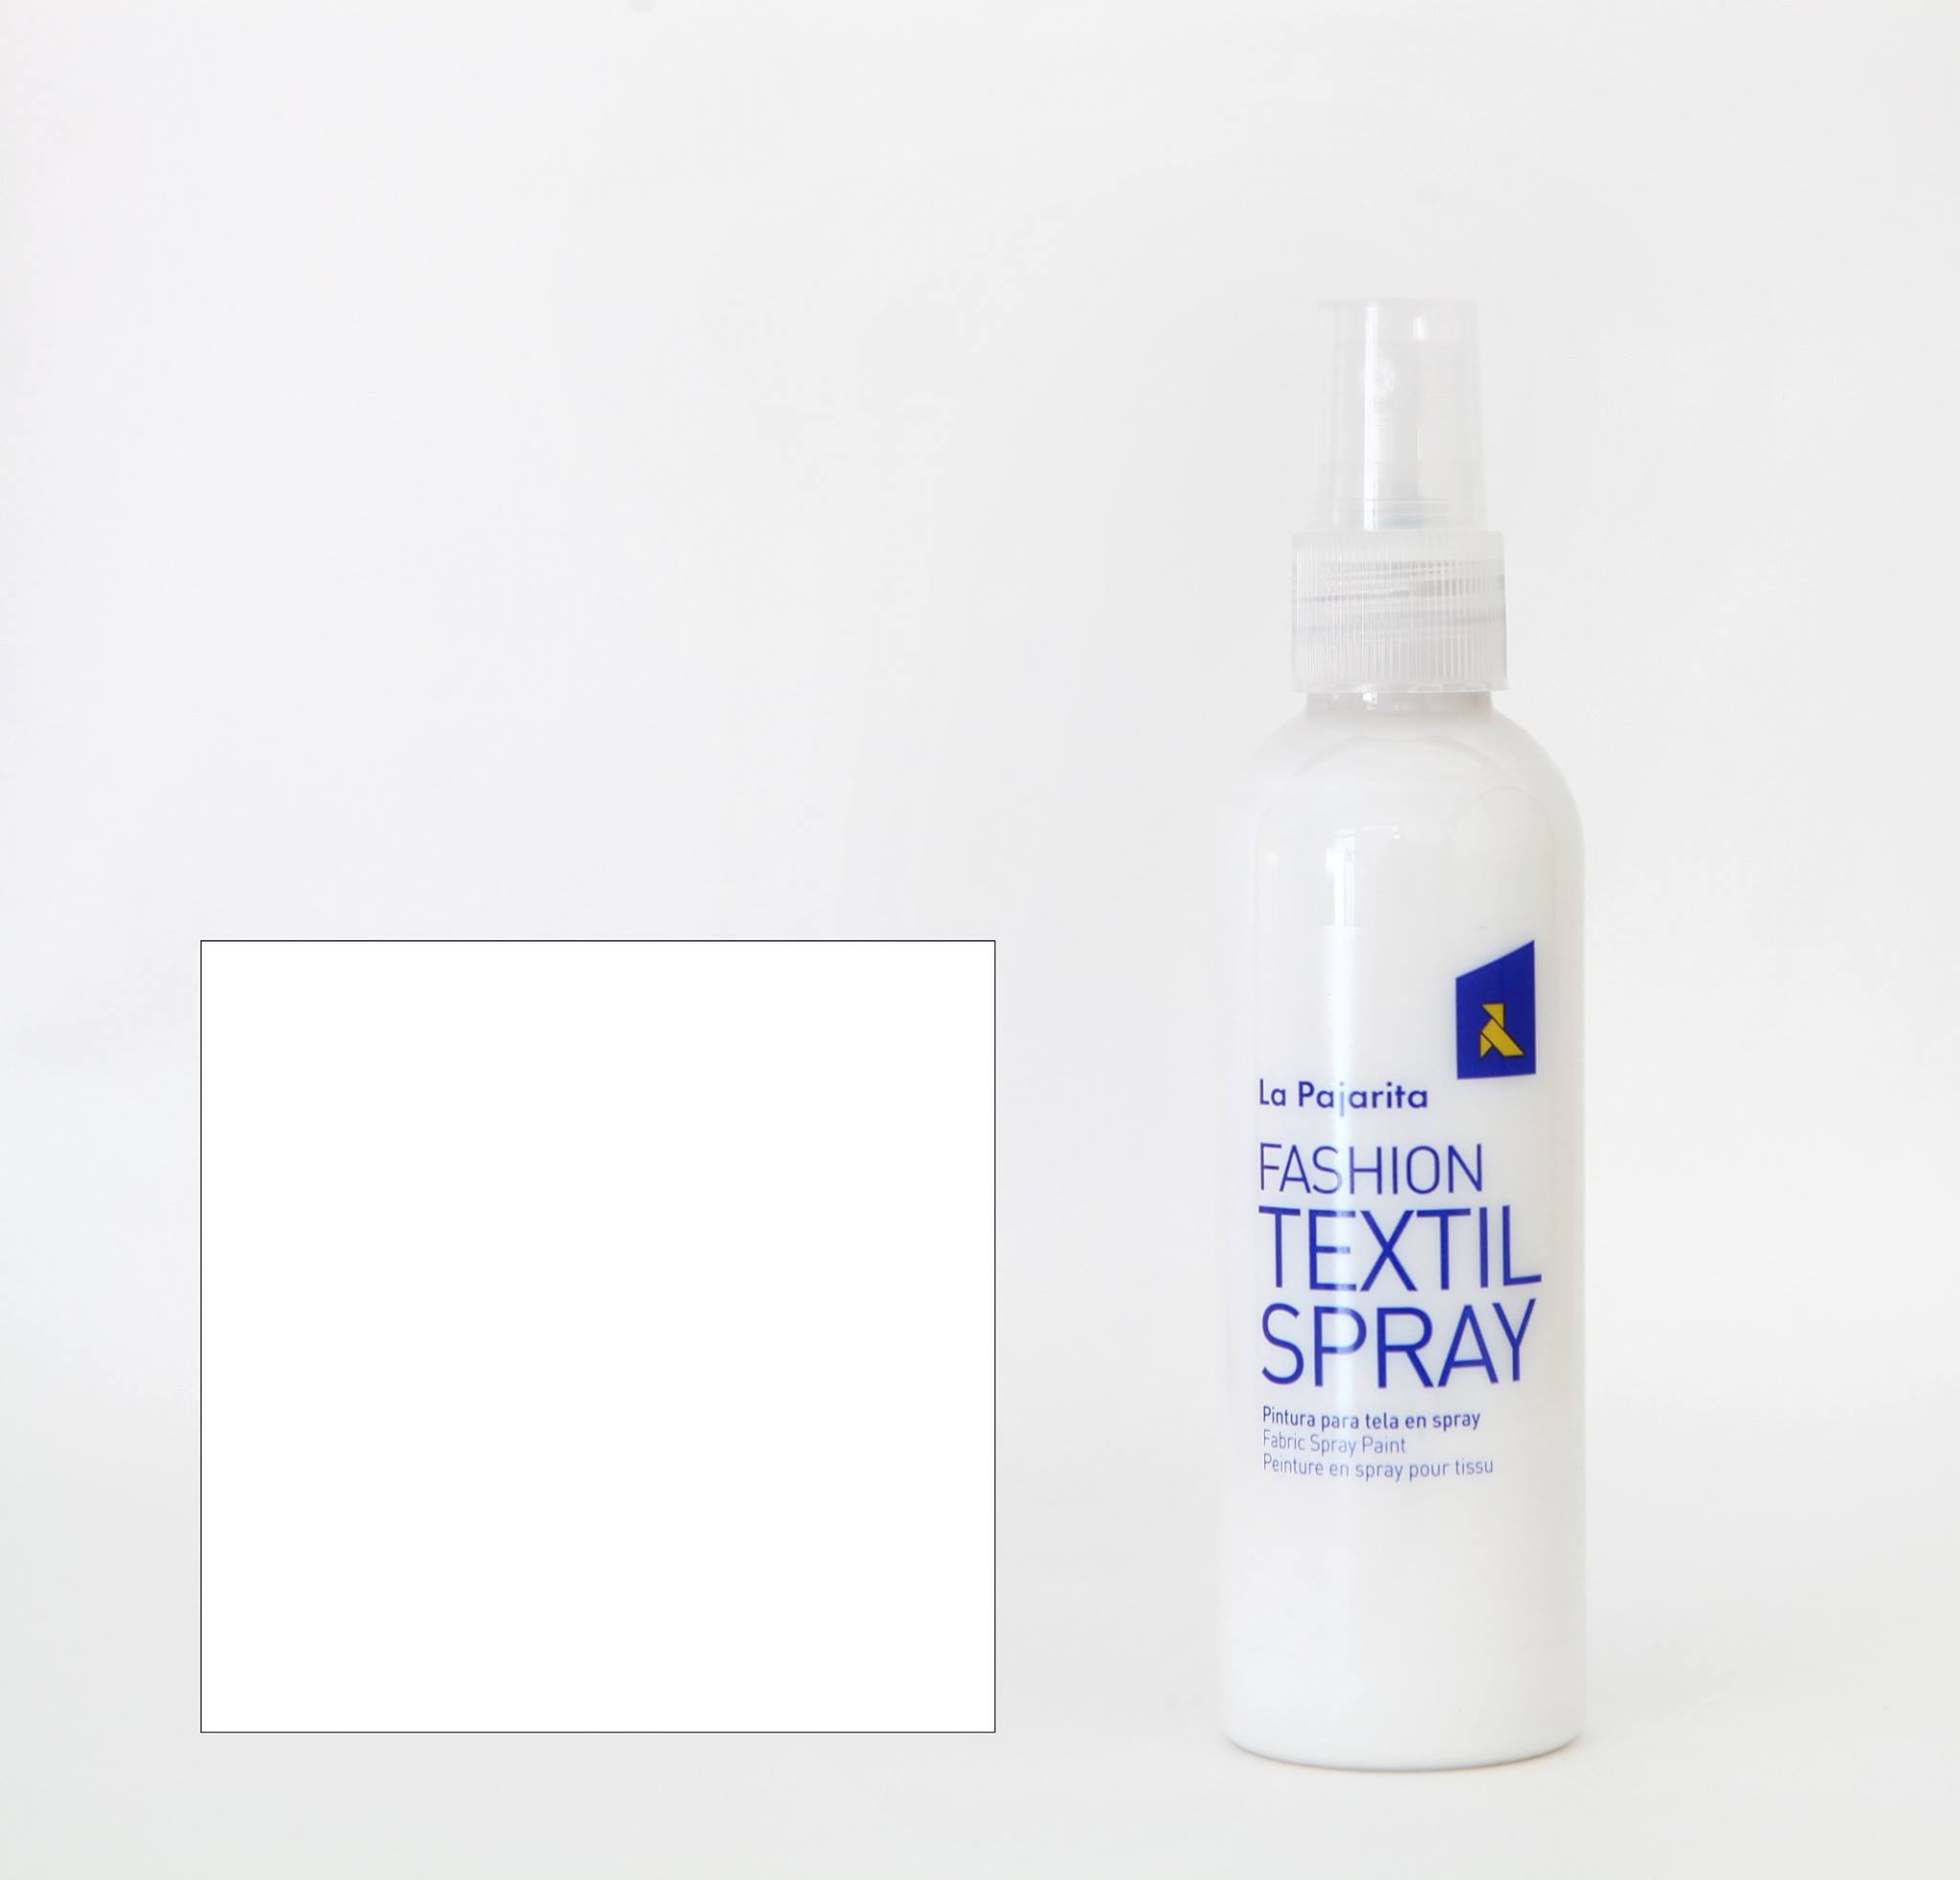 Textil spray ts-13 fluor yellow - La Pajarita